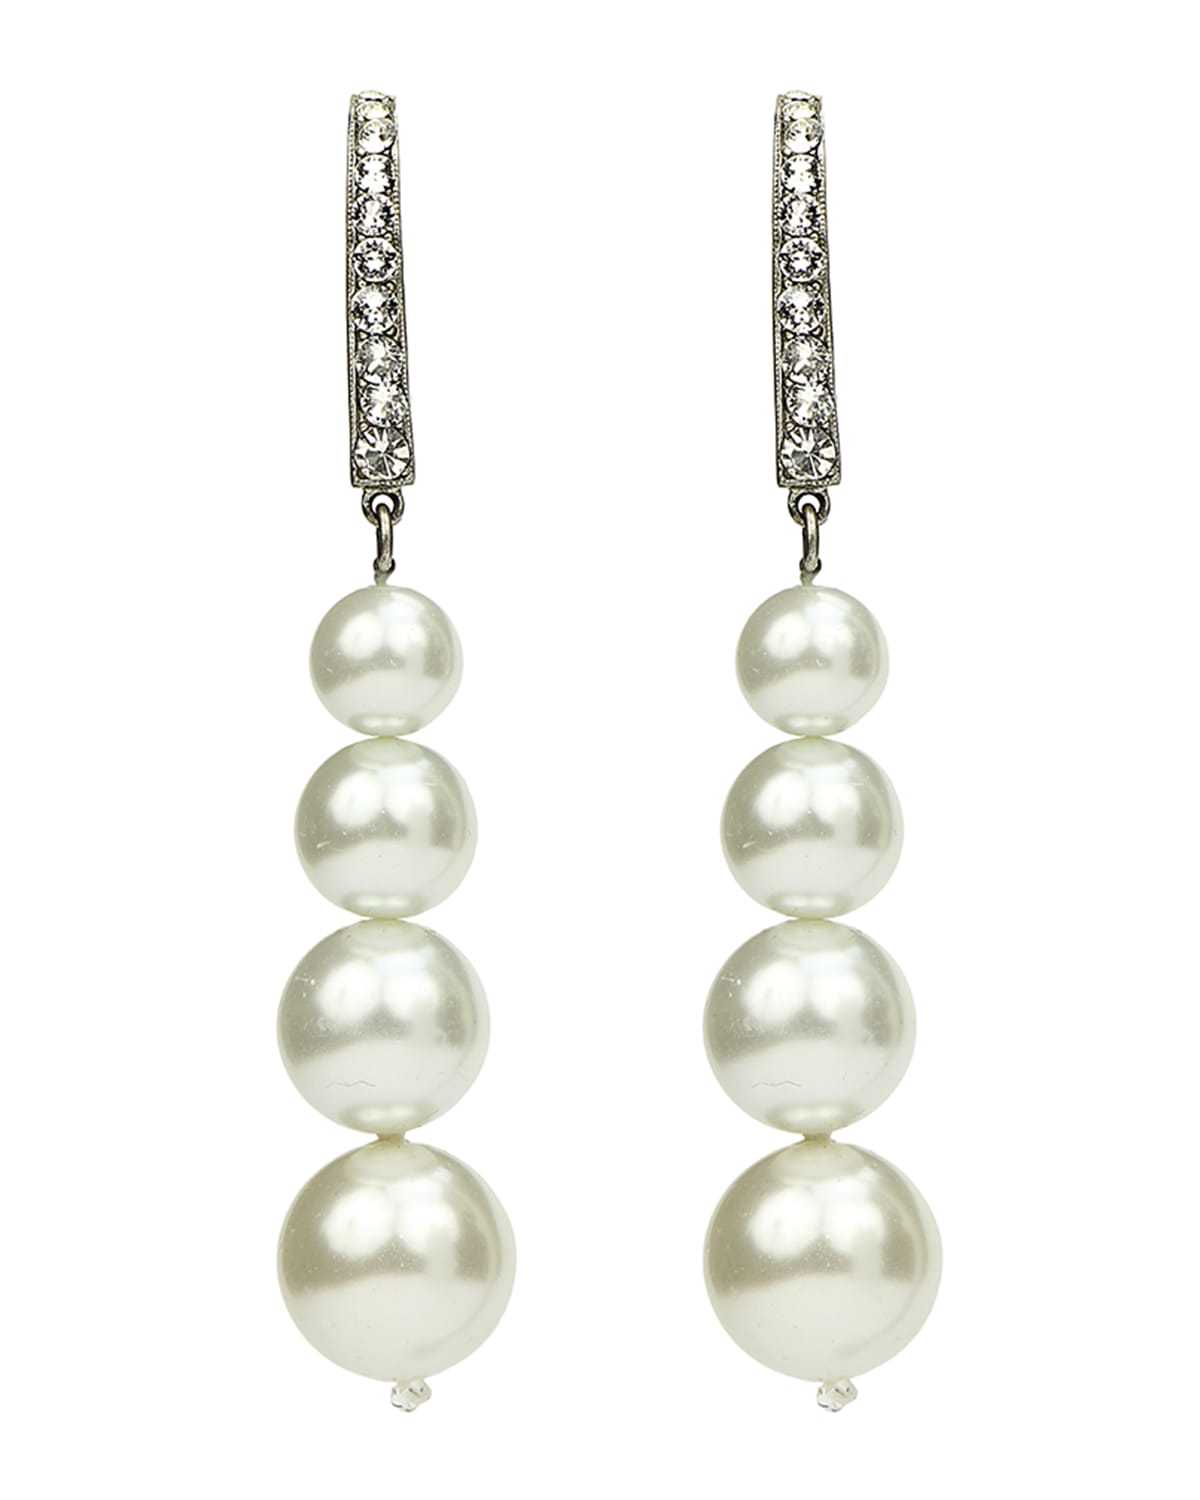 10mm Pearly Bead & Crystal Stud Earrings